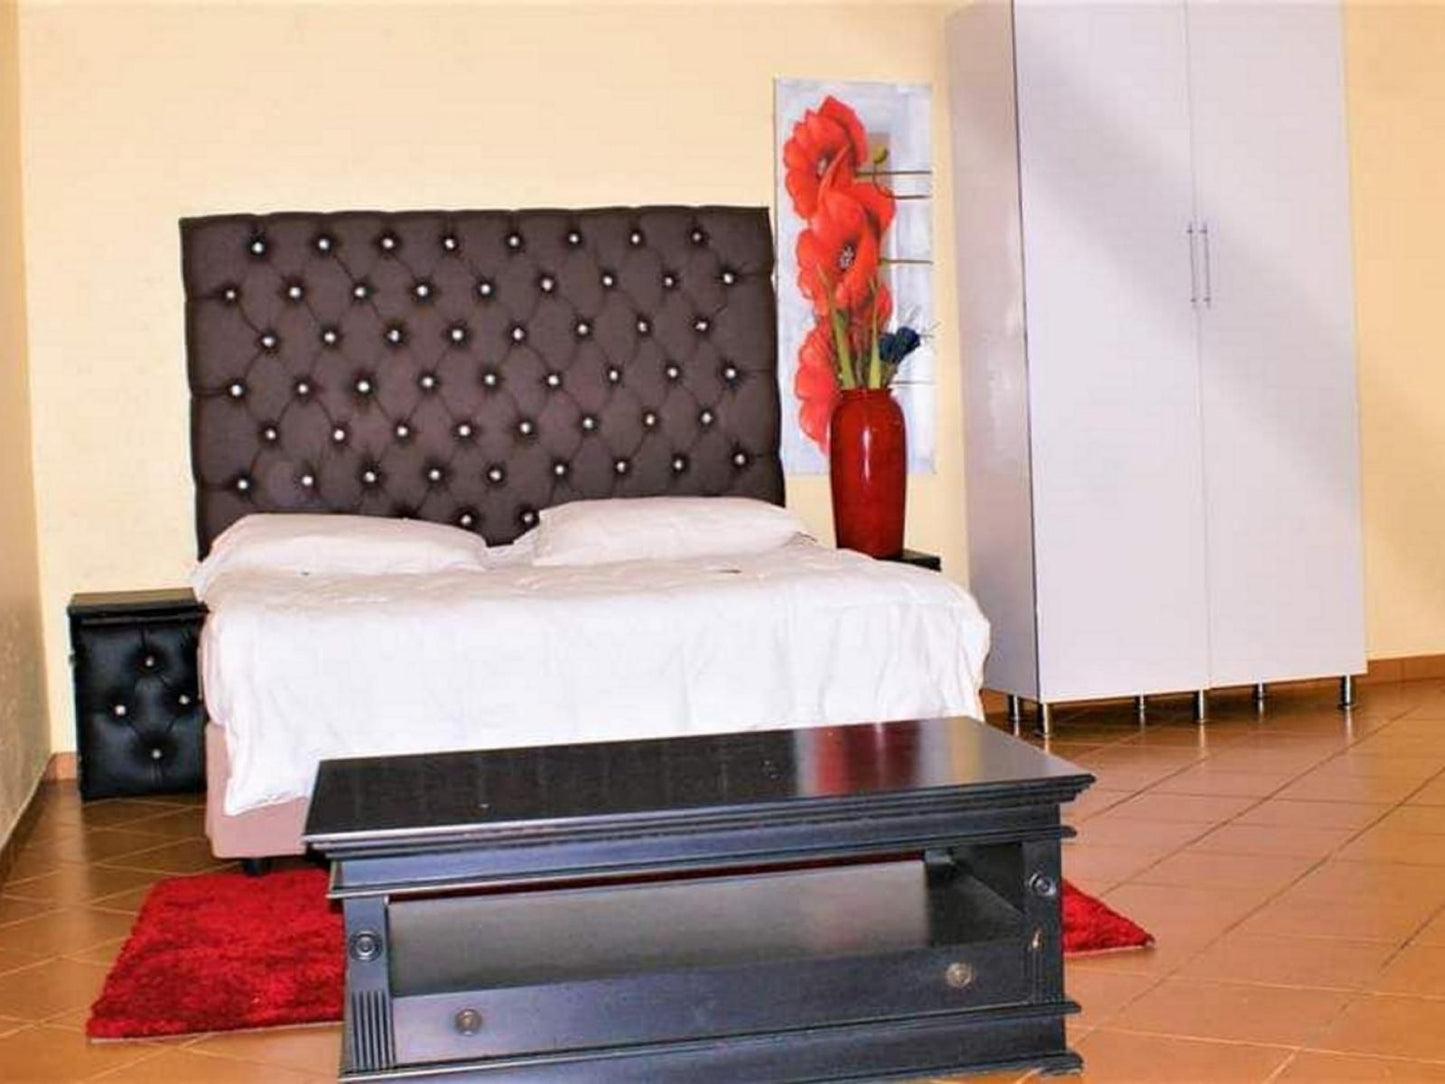 Tshinakie Family Resort Muhuyu Thohoyandou Limpopo Province South Africa Bedroom